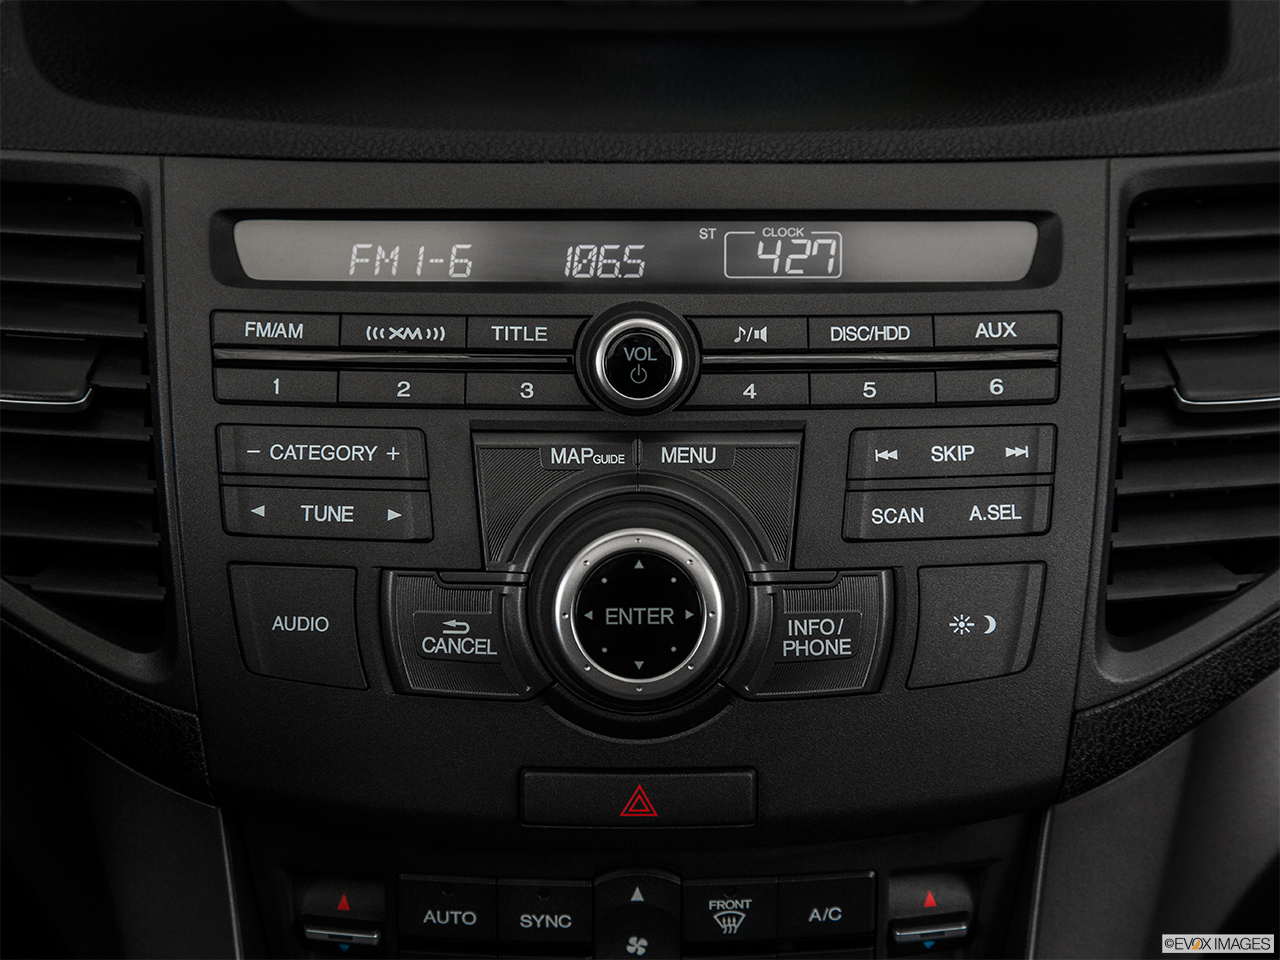 2014 Acura TSX 5-Speed Automatic Interior Bonus Shots (no set spec) 